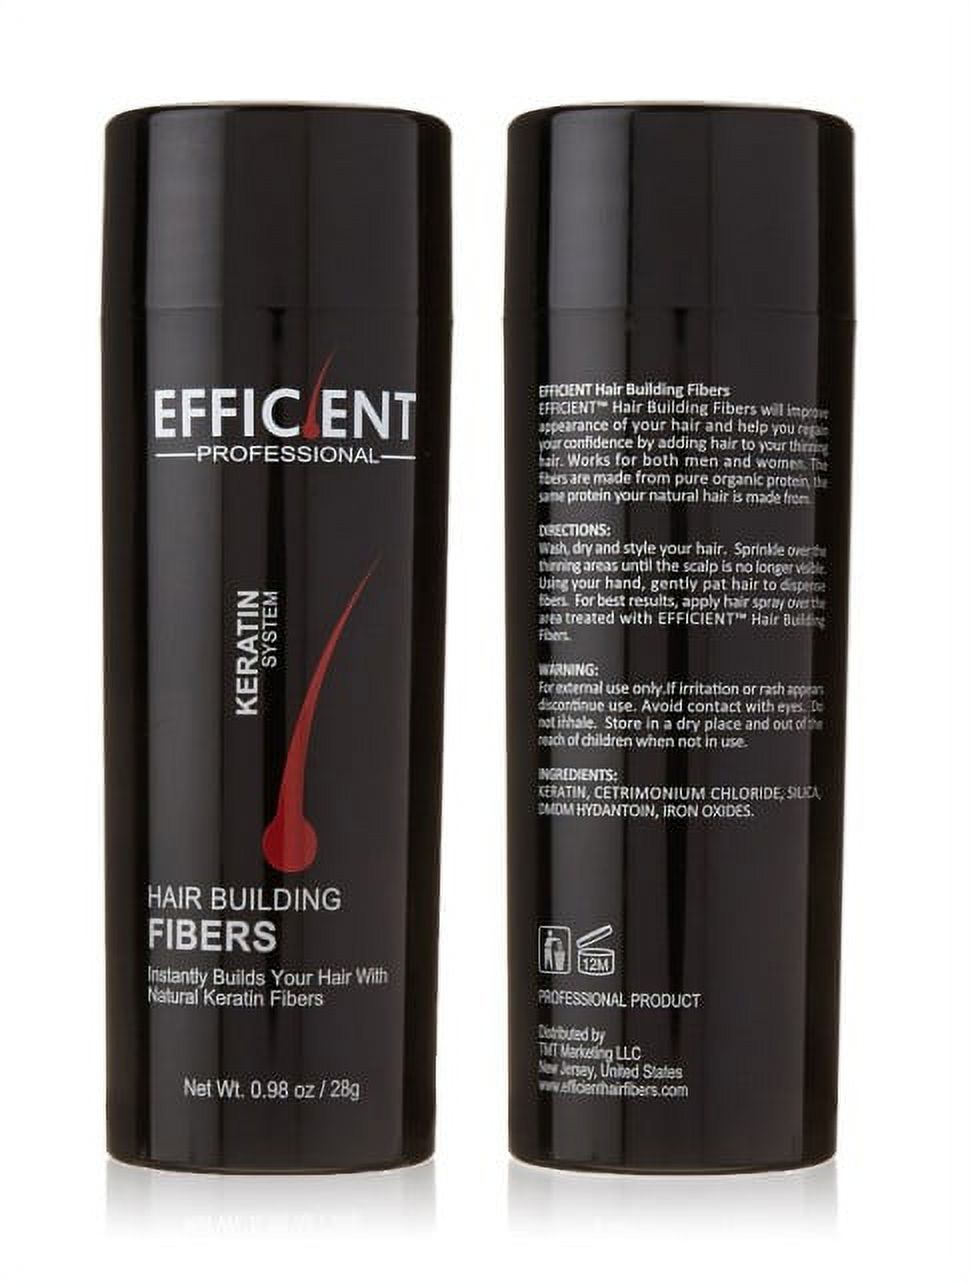 2 of EFFICIENT Keratin Hair Building Fibers, Hair Loss Concealer Net Wt. 28gm / 0.98 oz (Dark Brown) - image 2 of 2